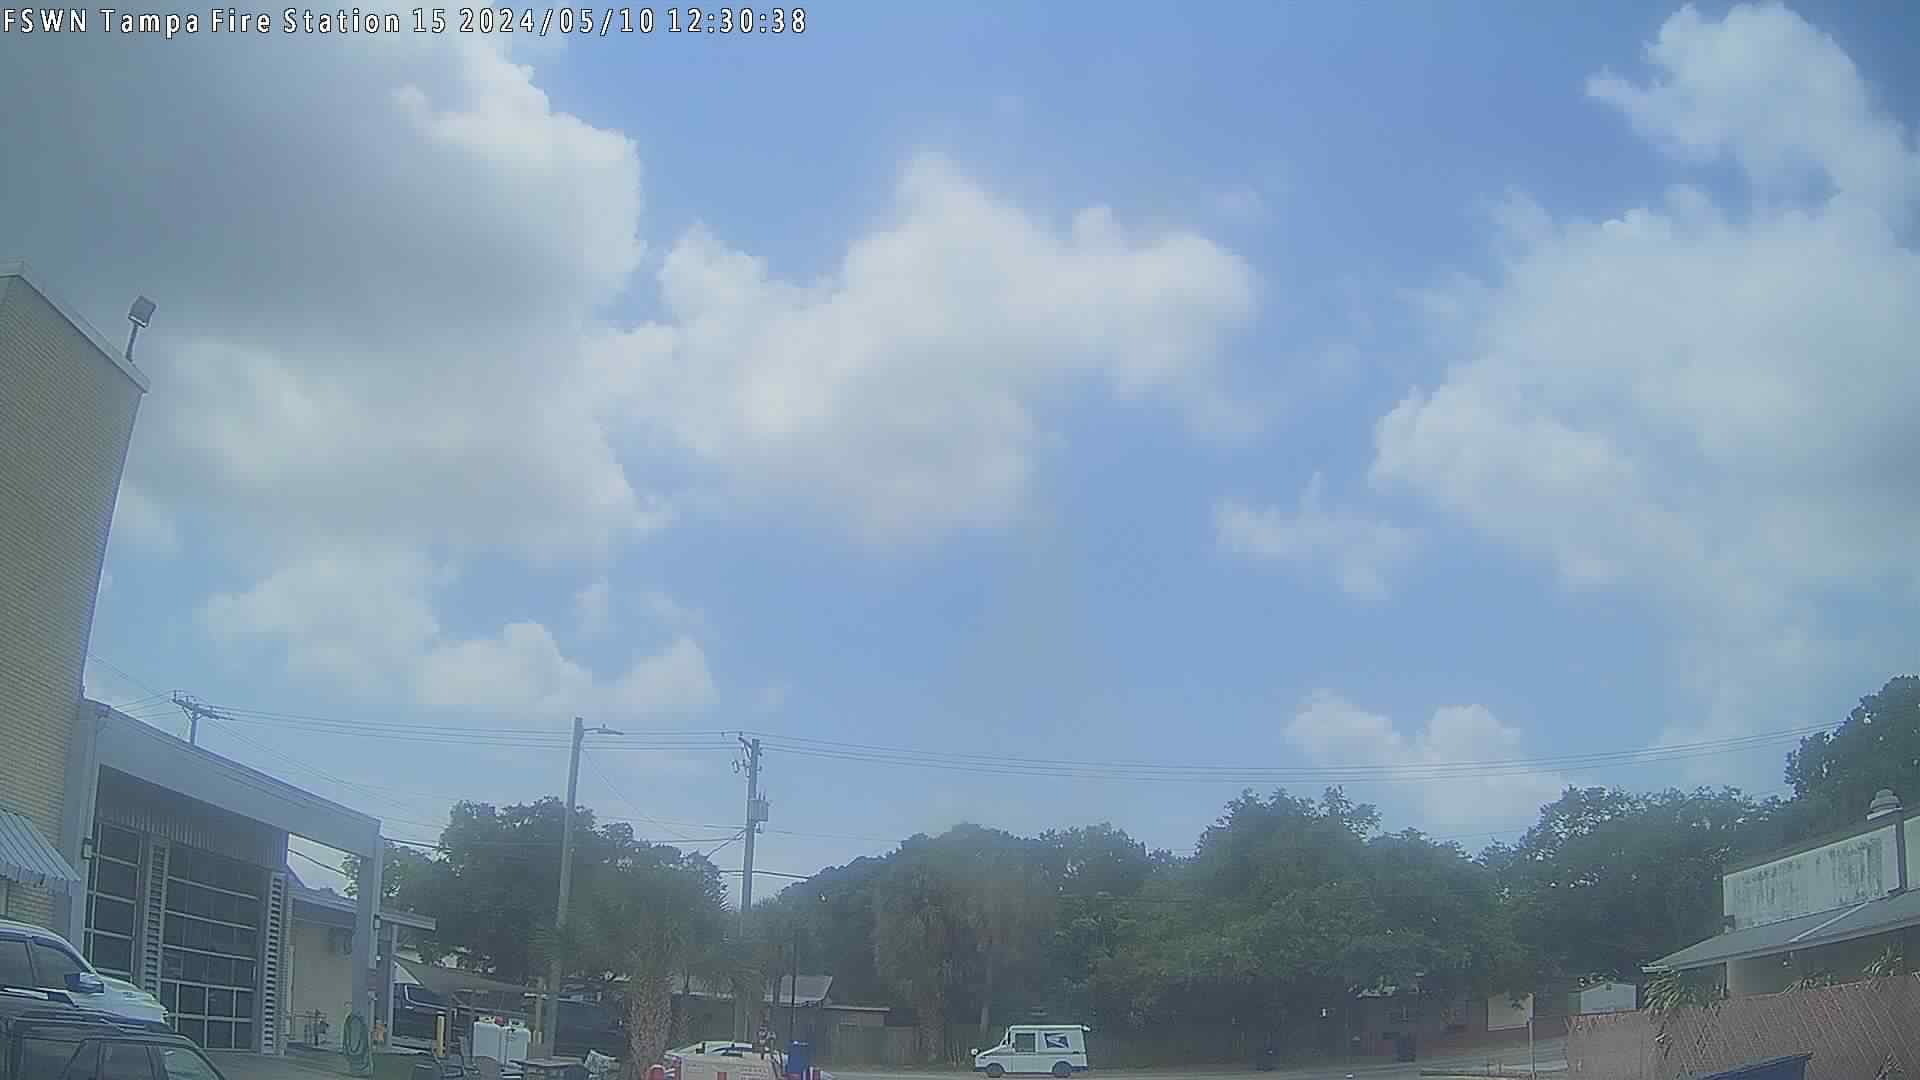  WeatherSTEM Cloud Camera FSWNTampaFire22 in Hillsborough County, Florida FL at FSWN AlertTampa South